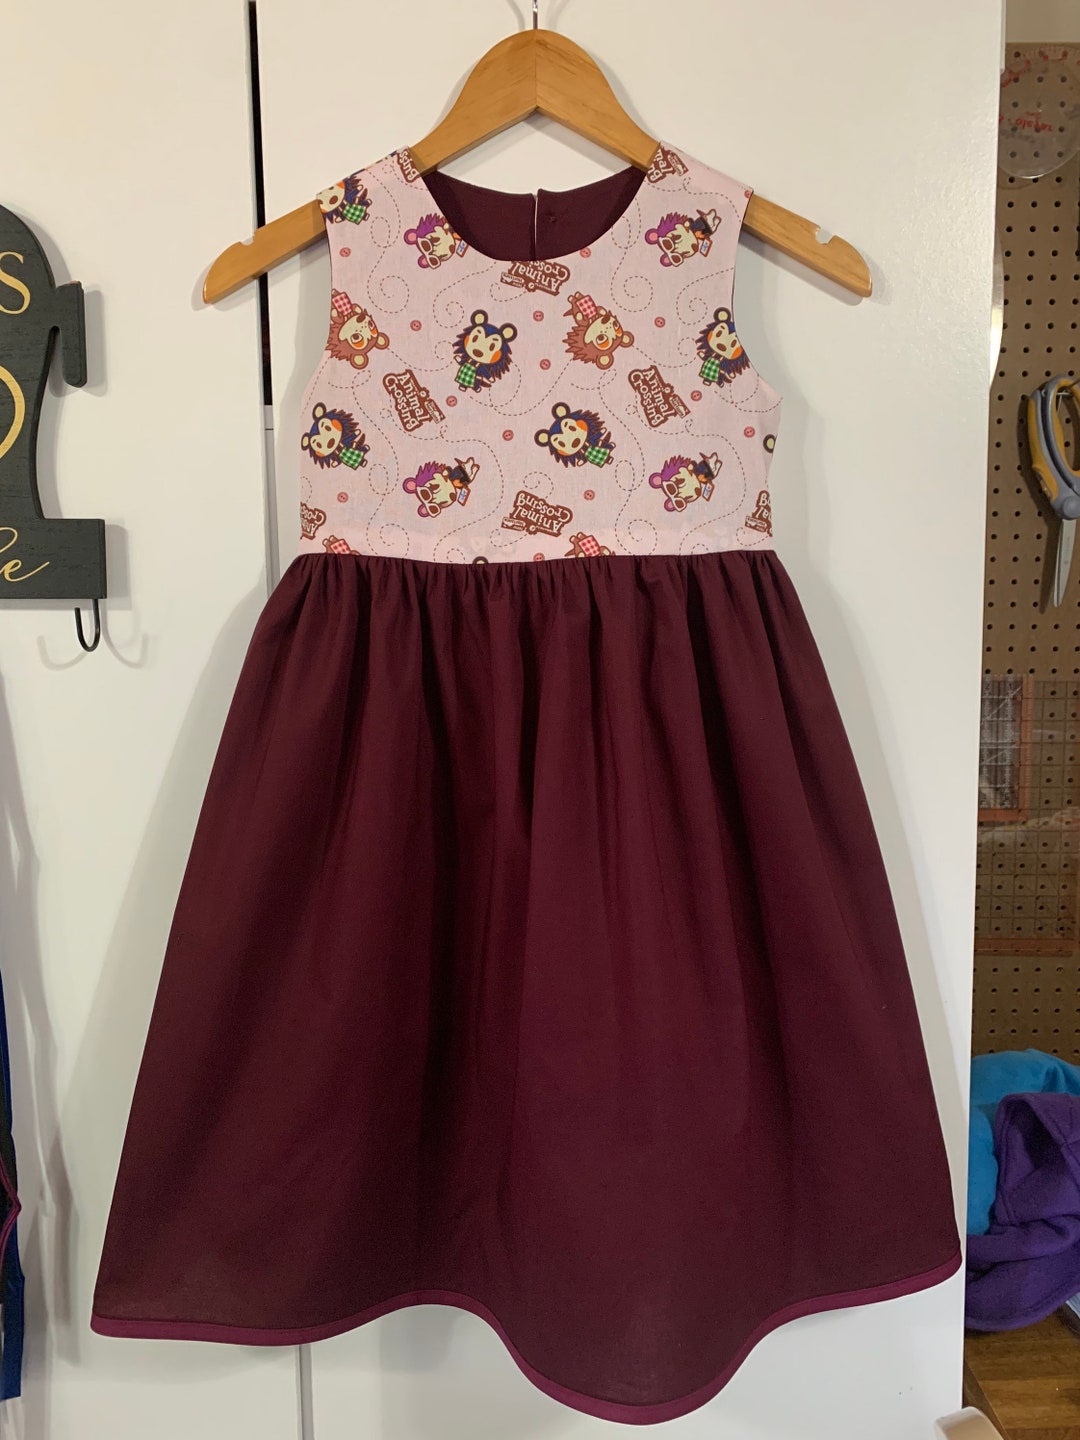 Animal Crossing Inspired Dress - Etsy